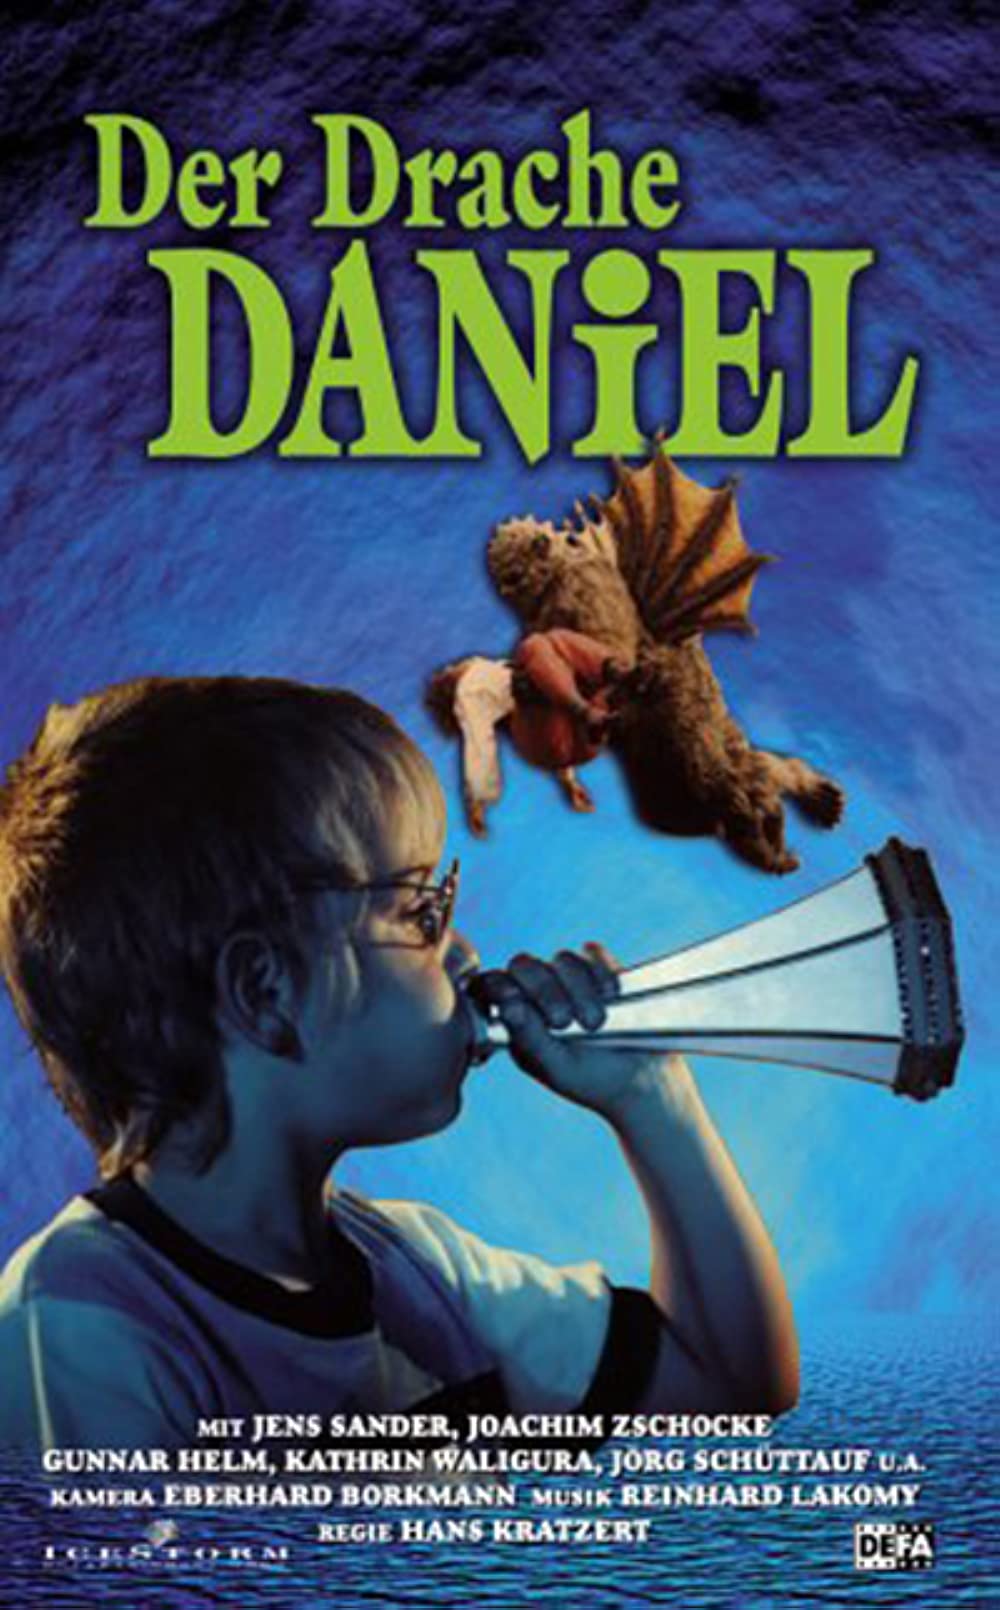 Der Drache Daniel